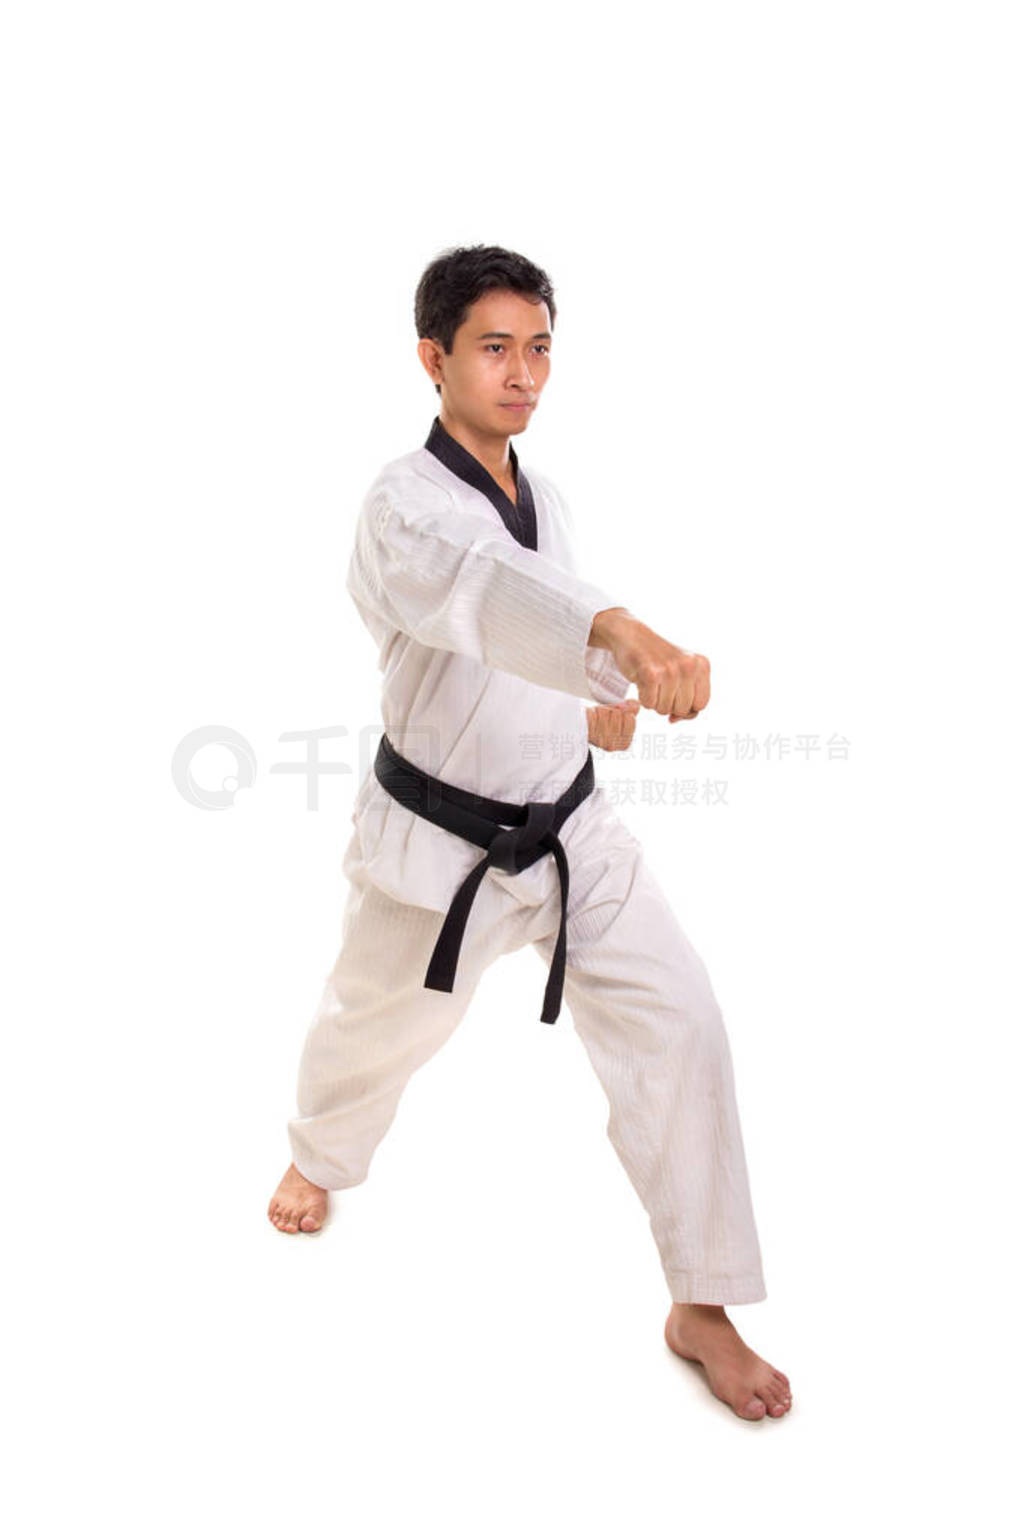 Male martial artist right straight punch, full length shot